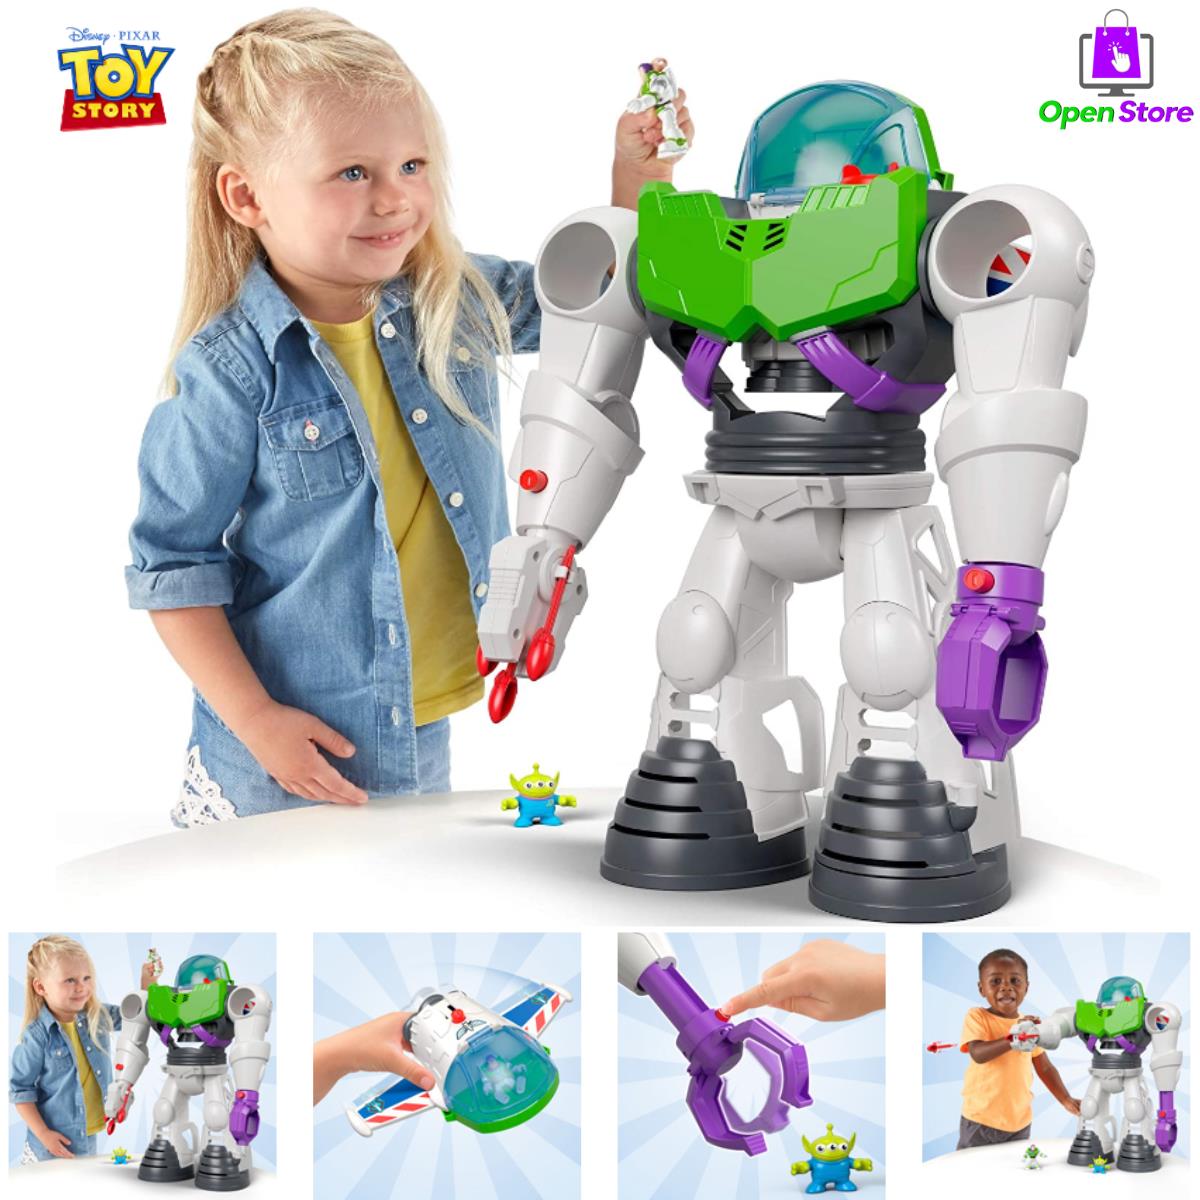 Fisher Price Disney Pixar Toy Story Buzz Lightyear Robot Playset Play Kids